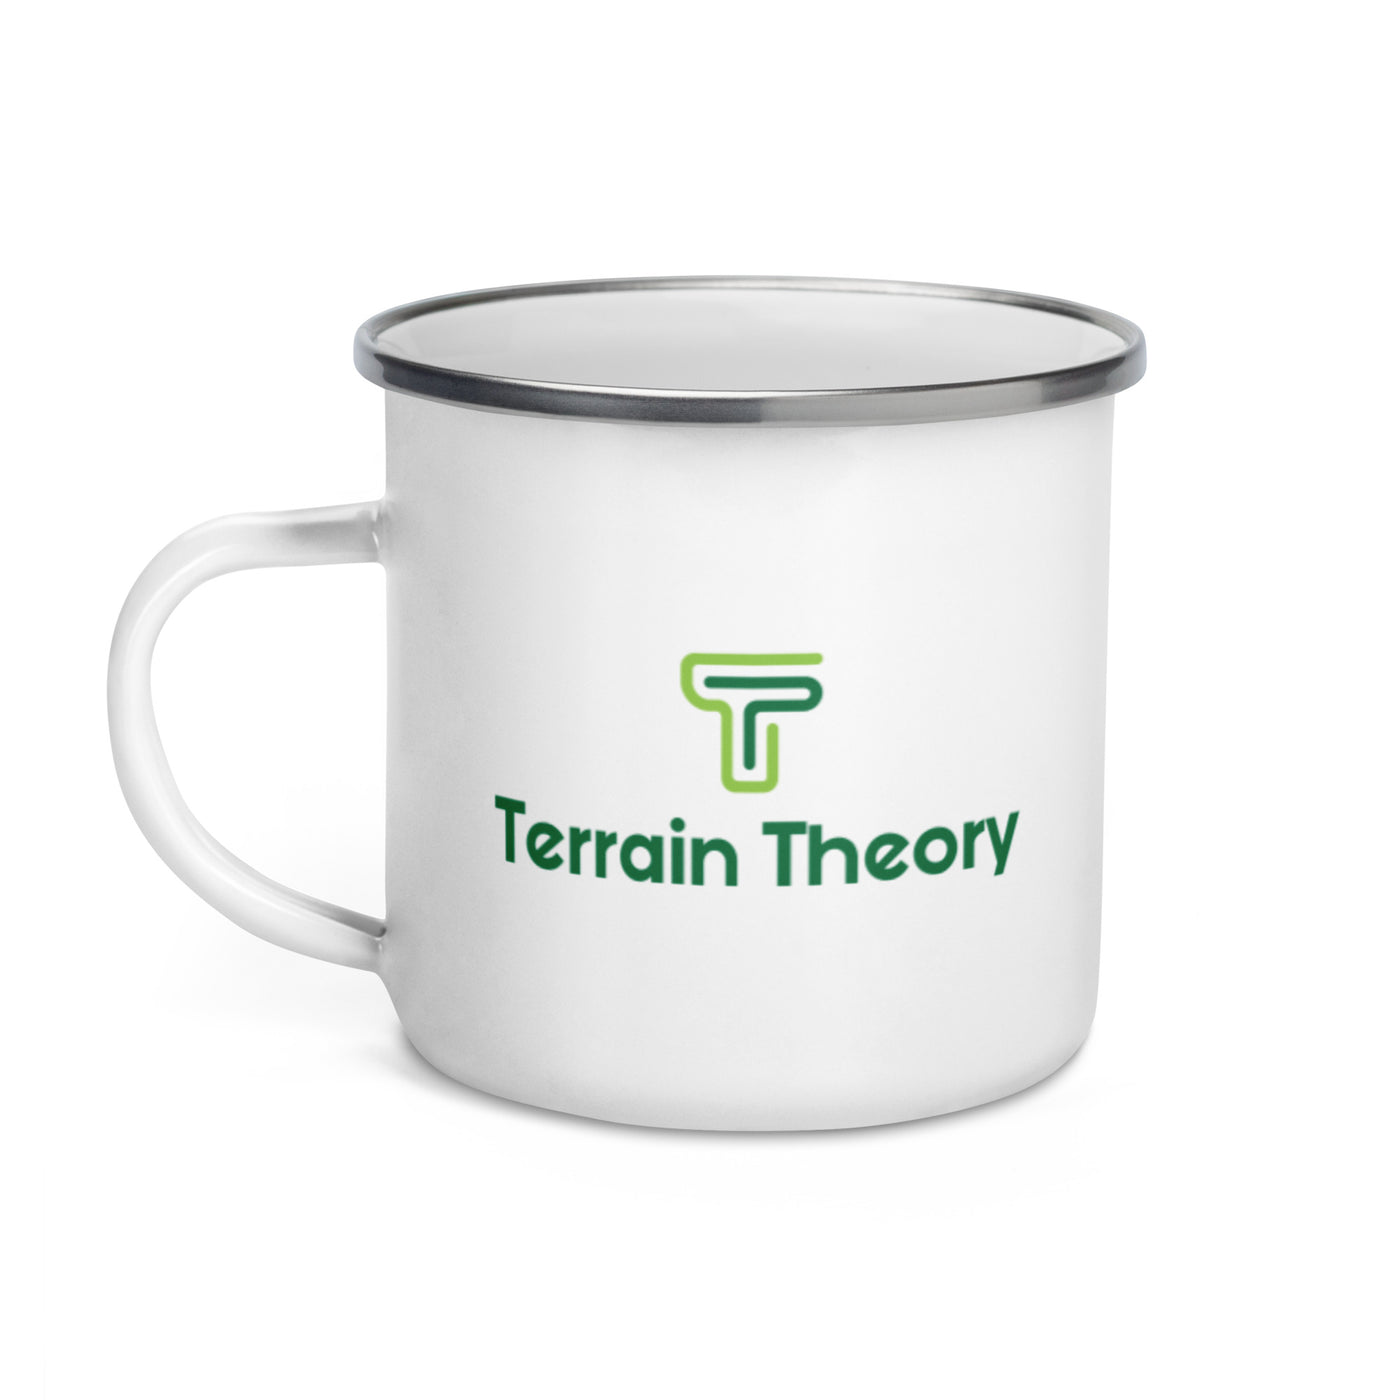 Terrain Theory Enamel Mug